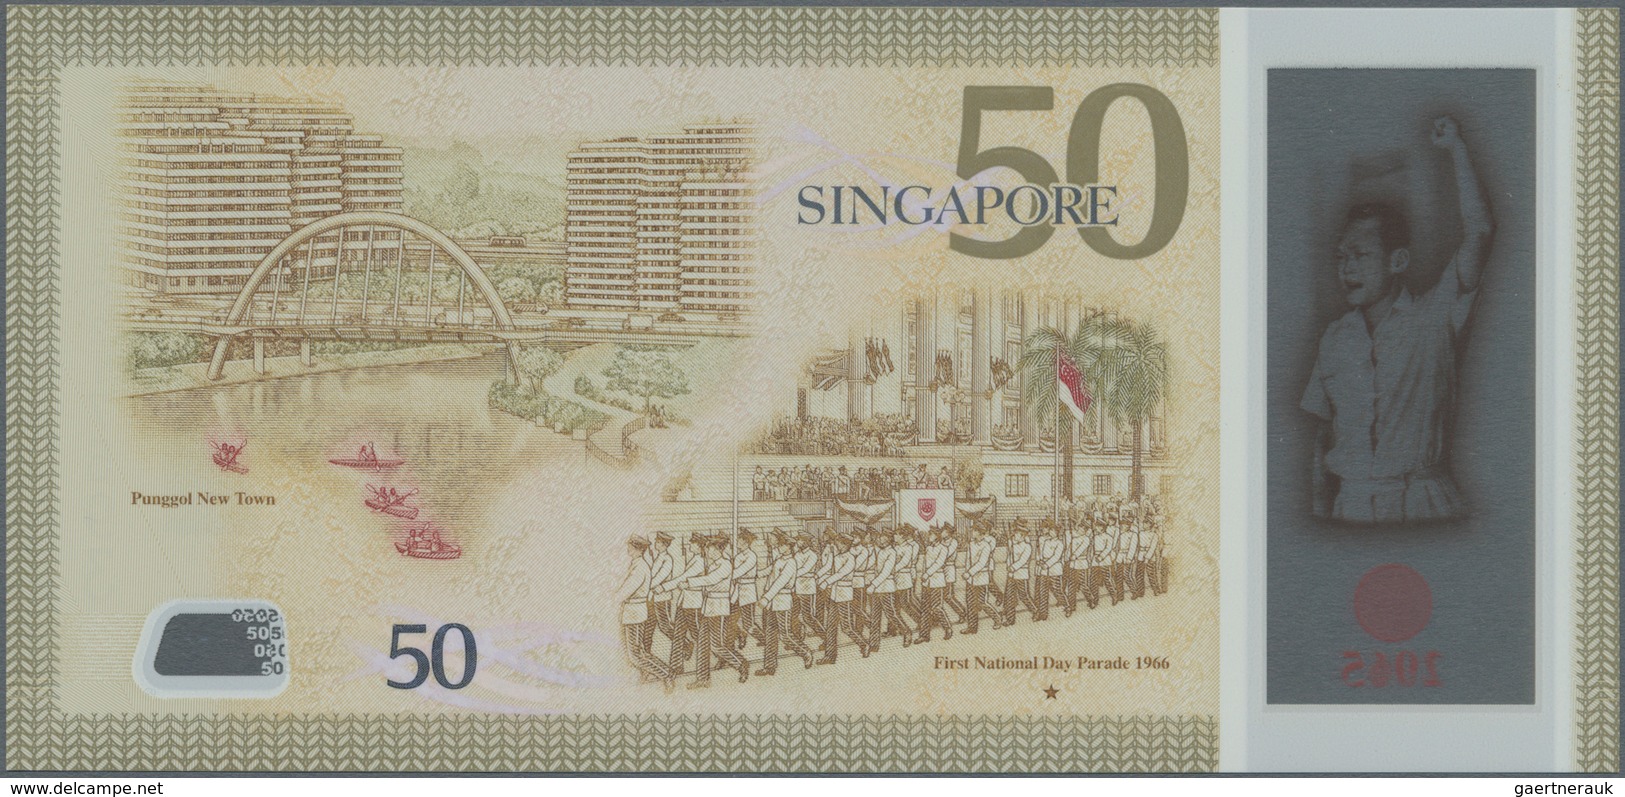 Singapore / Singapur: Monetary Authority Of Singapore Set With 6 Banknotes Of The 2015 Series Commem - Singapour